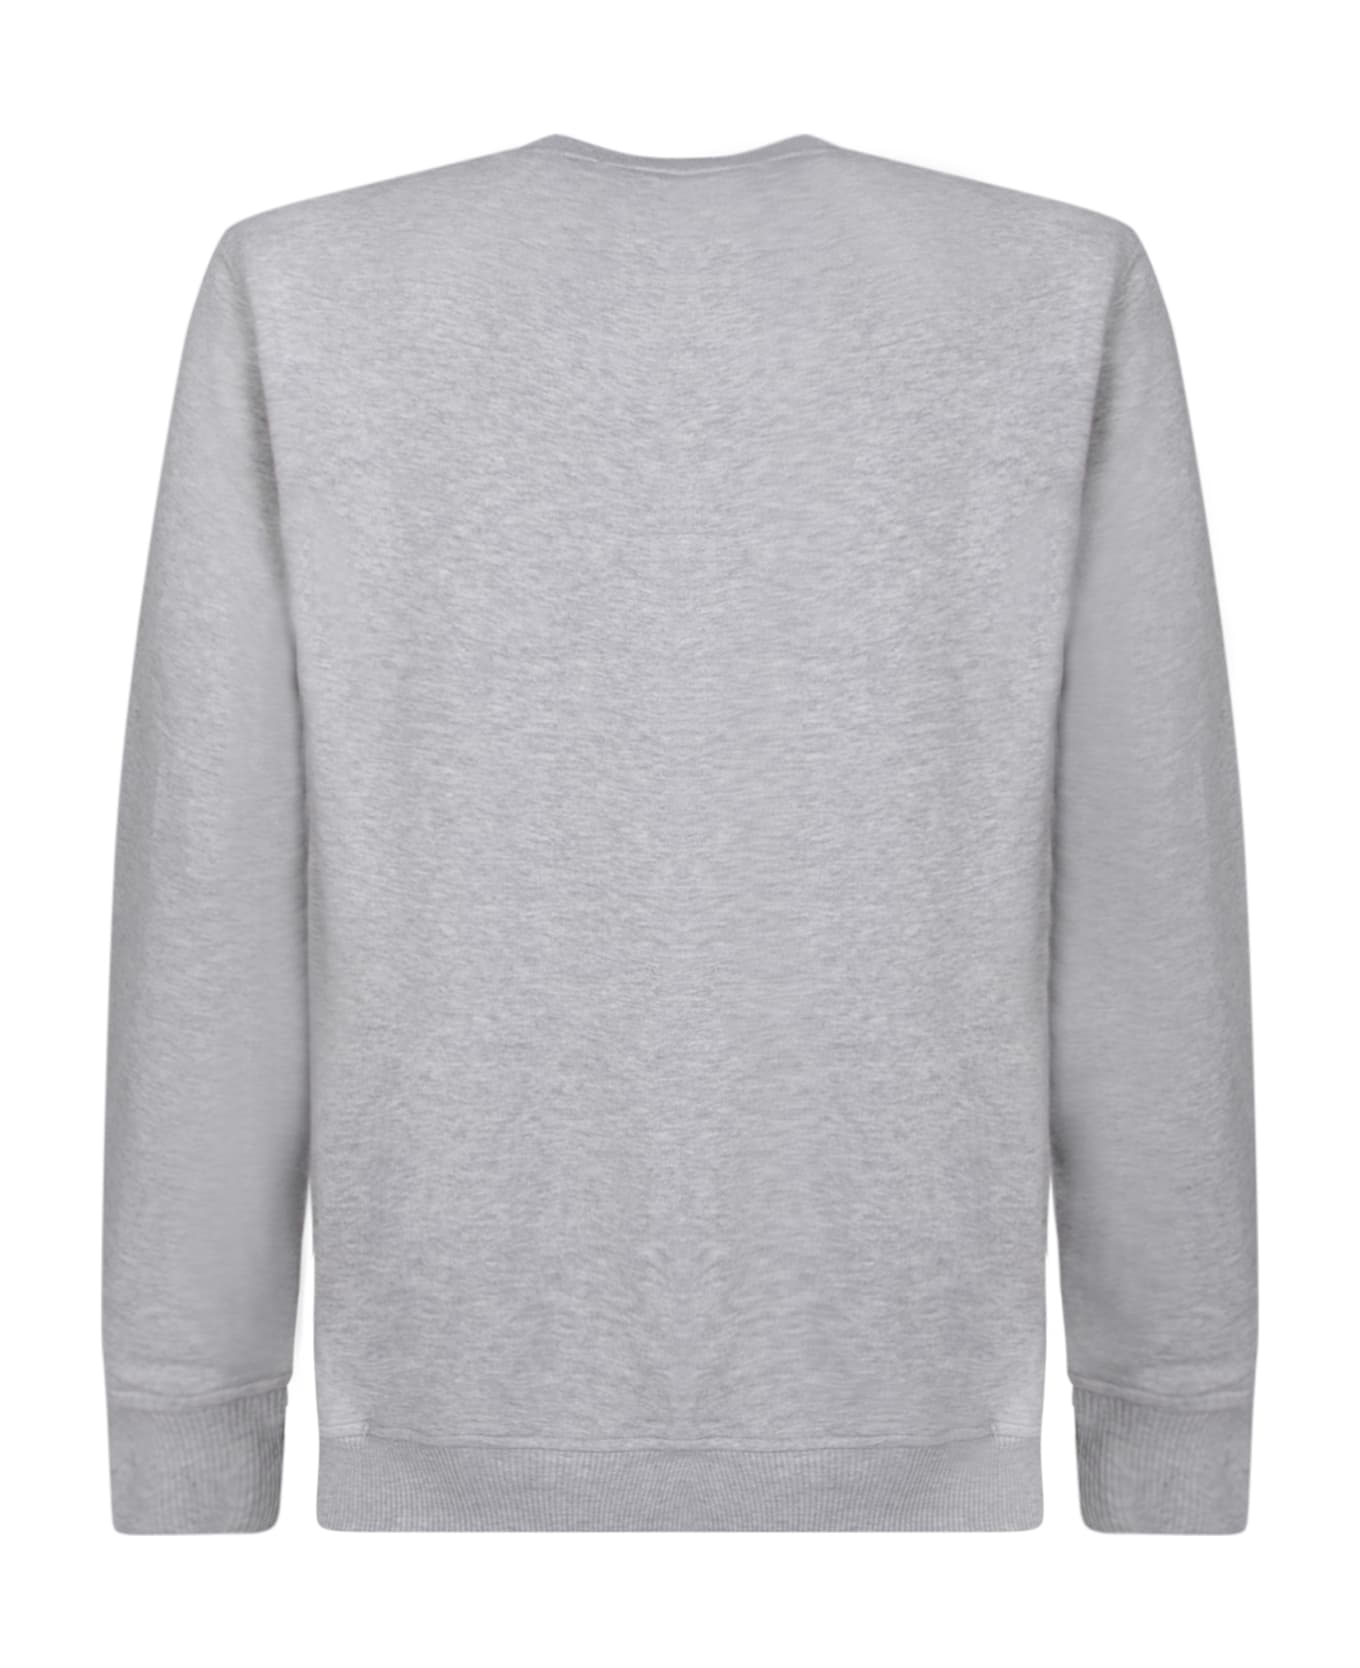 Comme des Garçons Shirt Marilyn Grey Sweatshirt - Grey